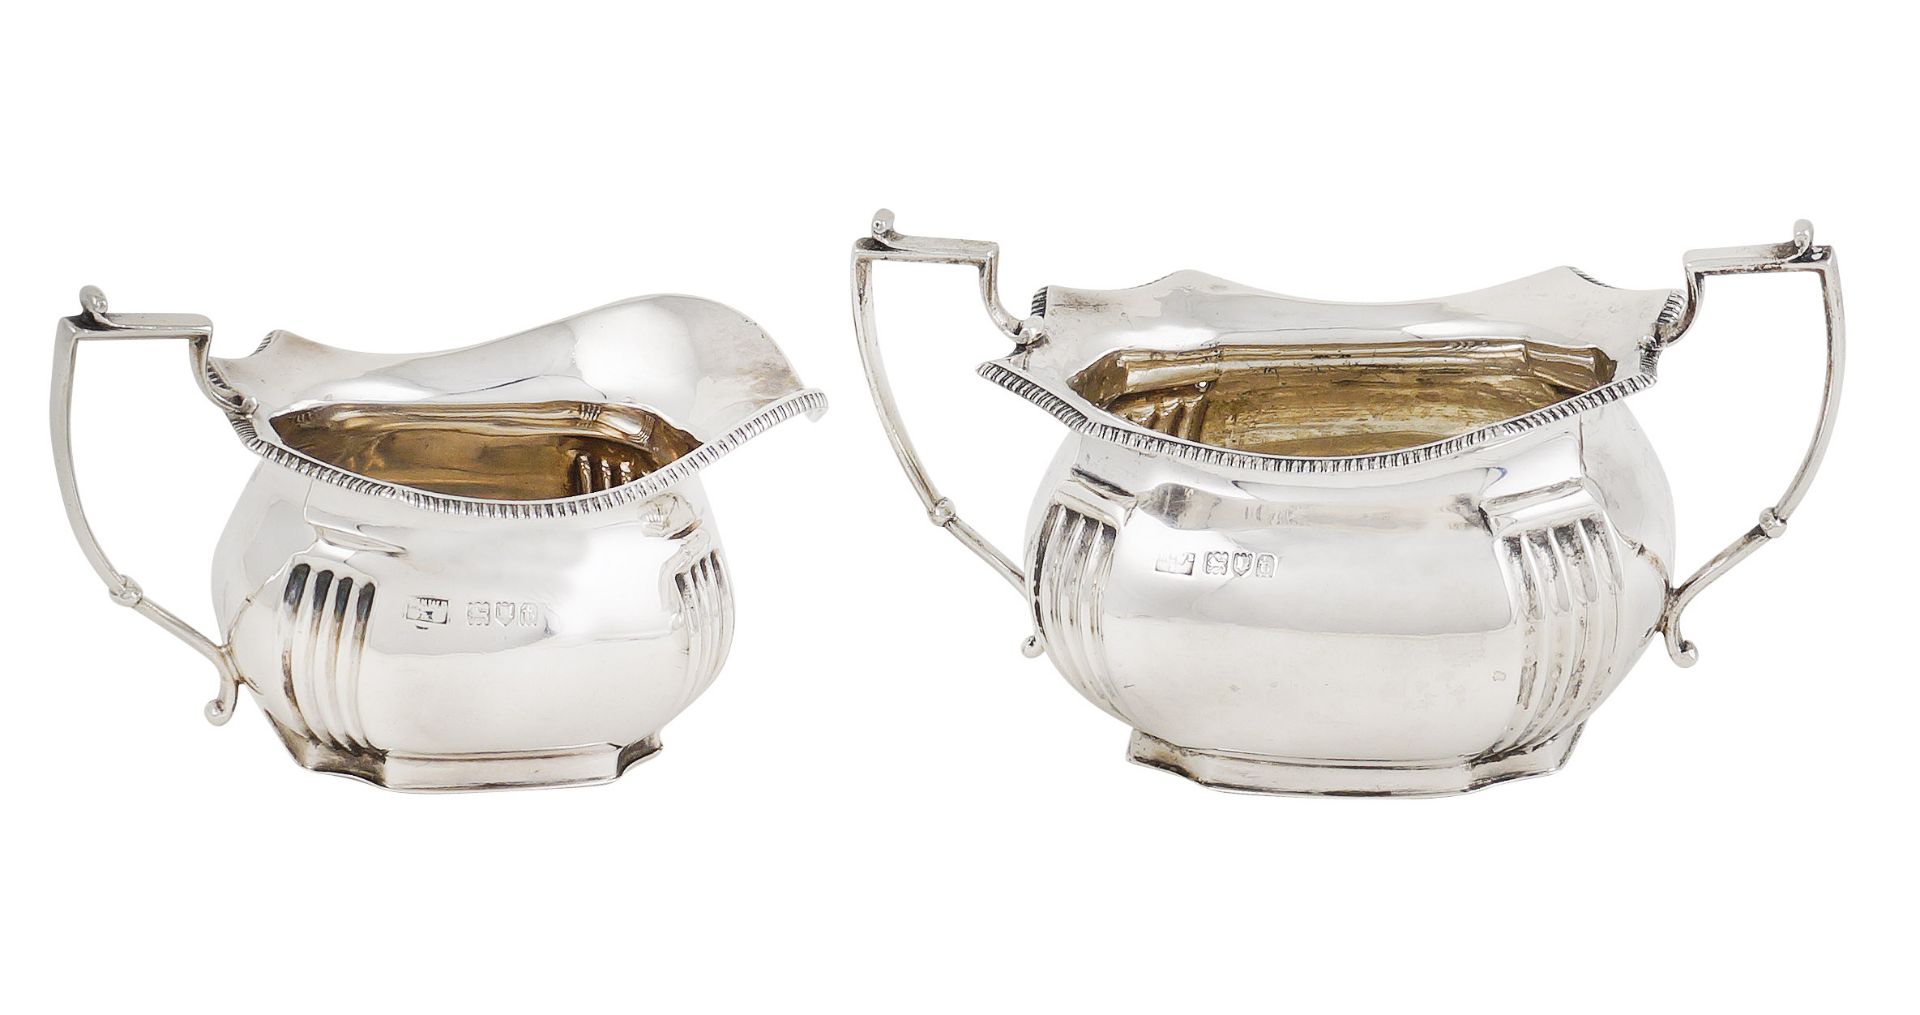 A silver sugar bowl and a milk jug London, 1914, silversmith Mappin & Webb h. 7 - 8 cm.